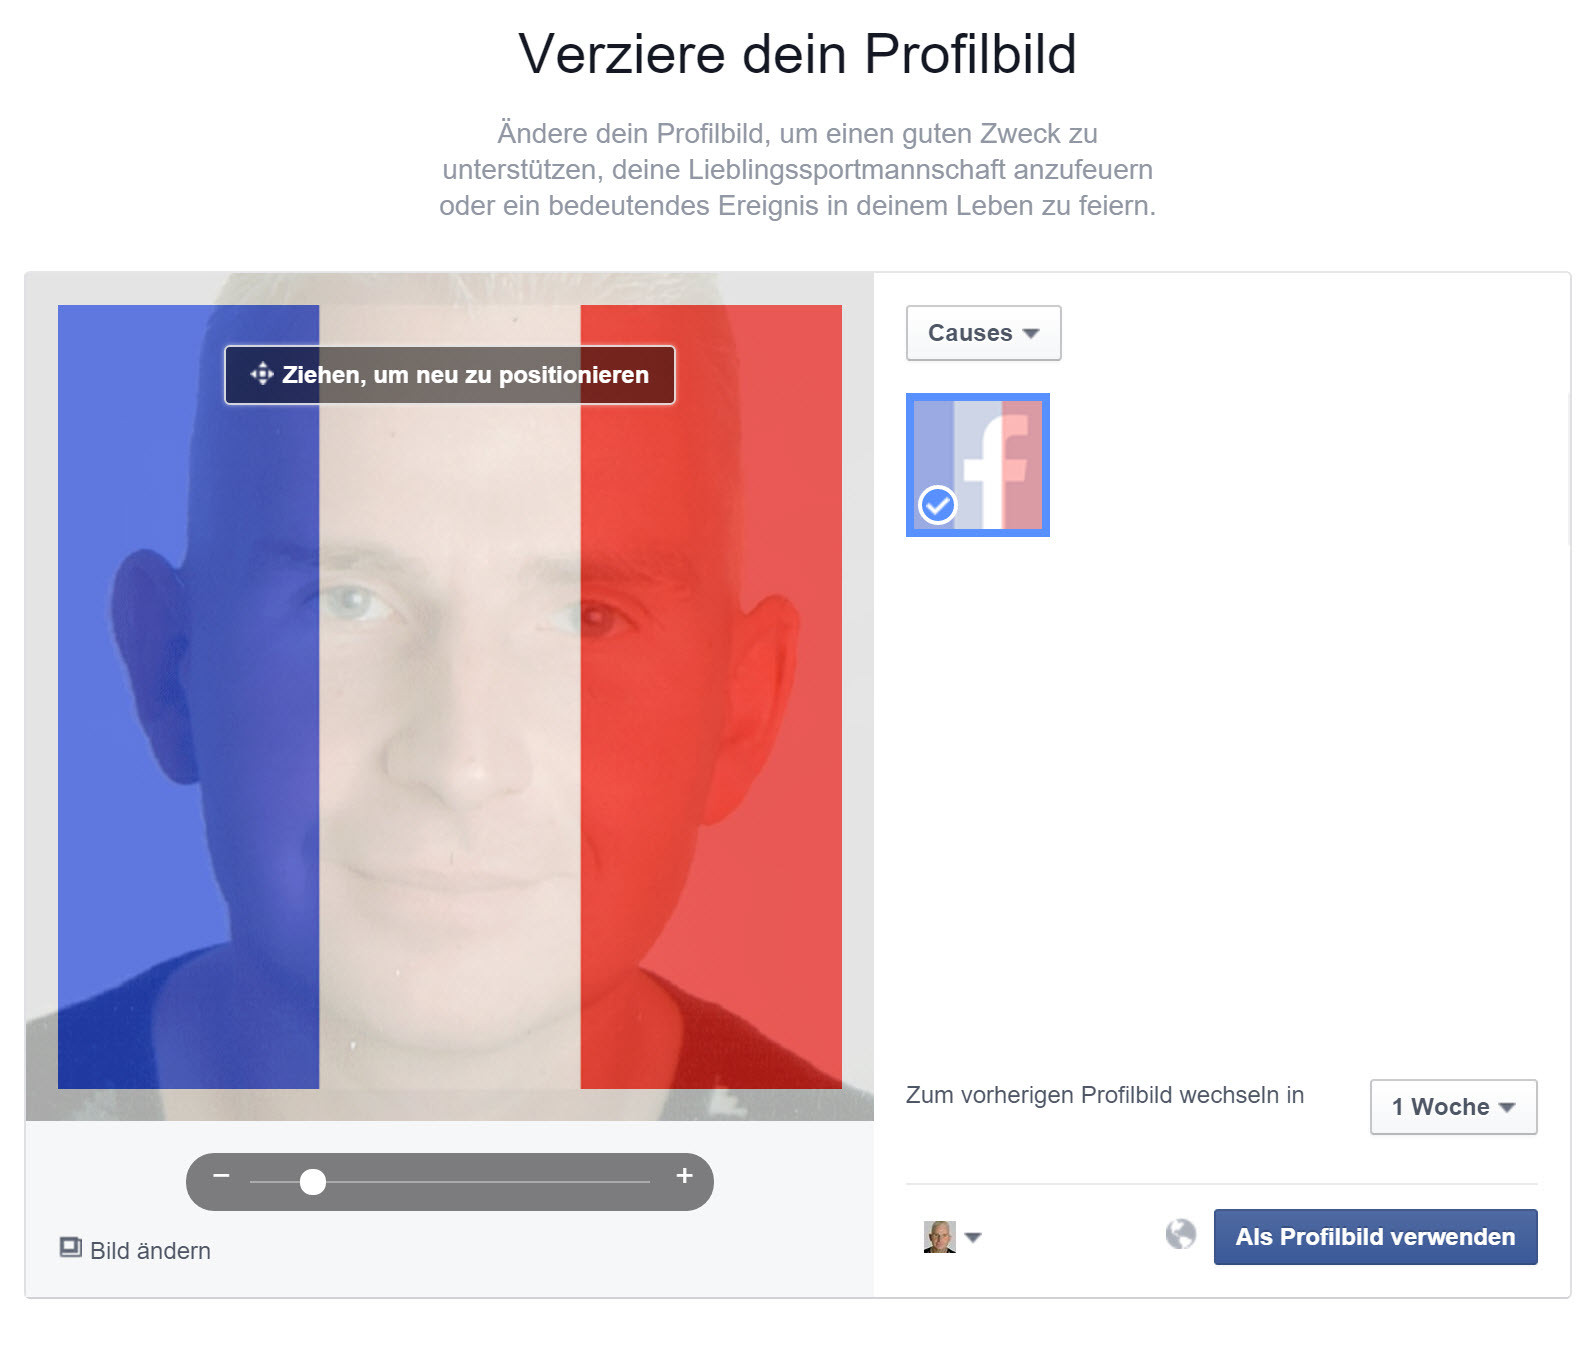 Facebook temporäres profilbild verlängern